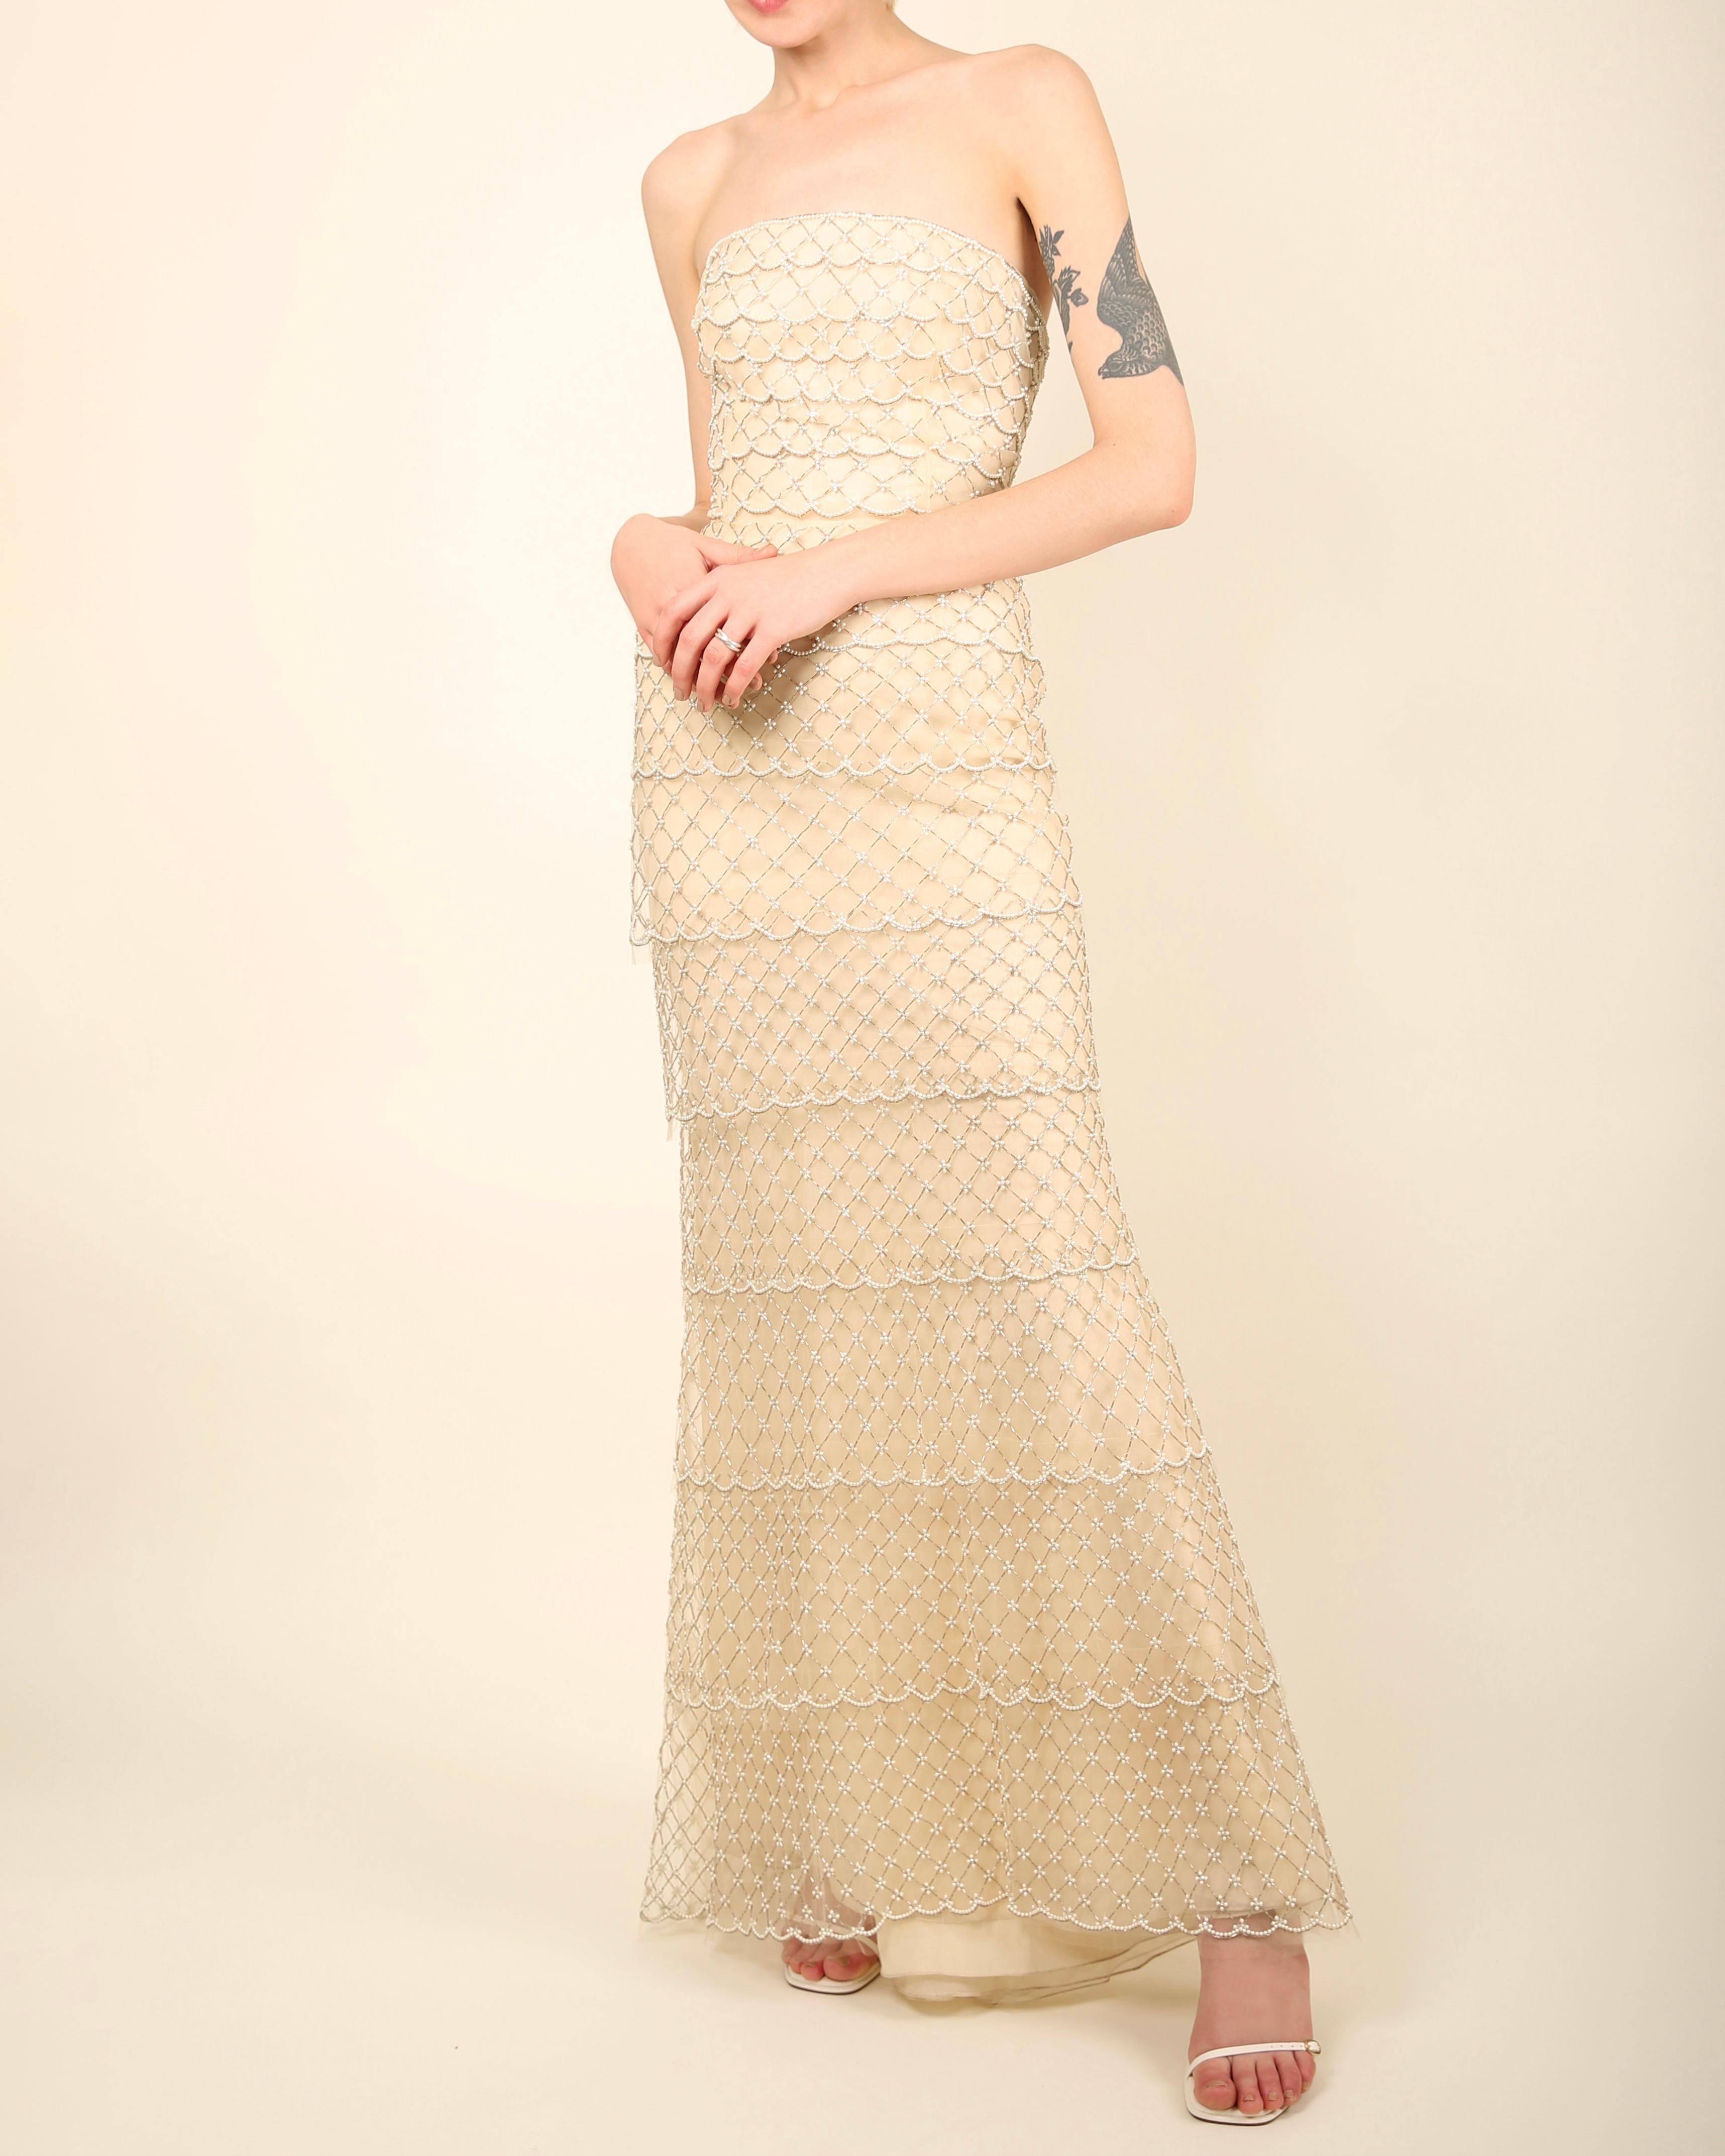 Oscar de la Renta S/S 2014 strapless tiered sheer mesh pearl wedding dress gown 5